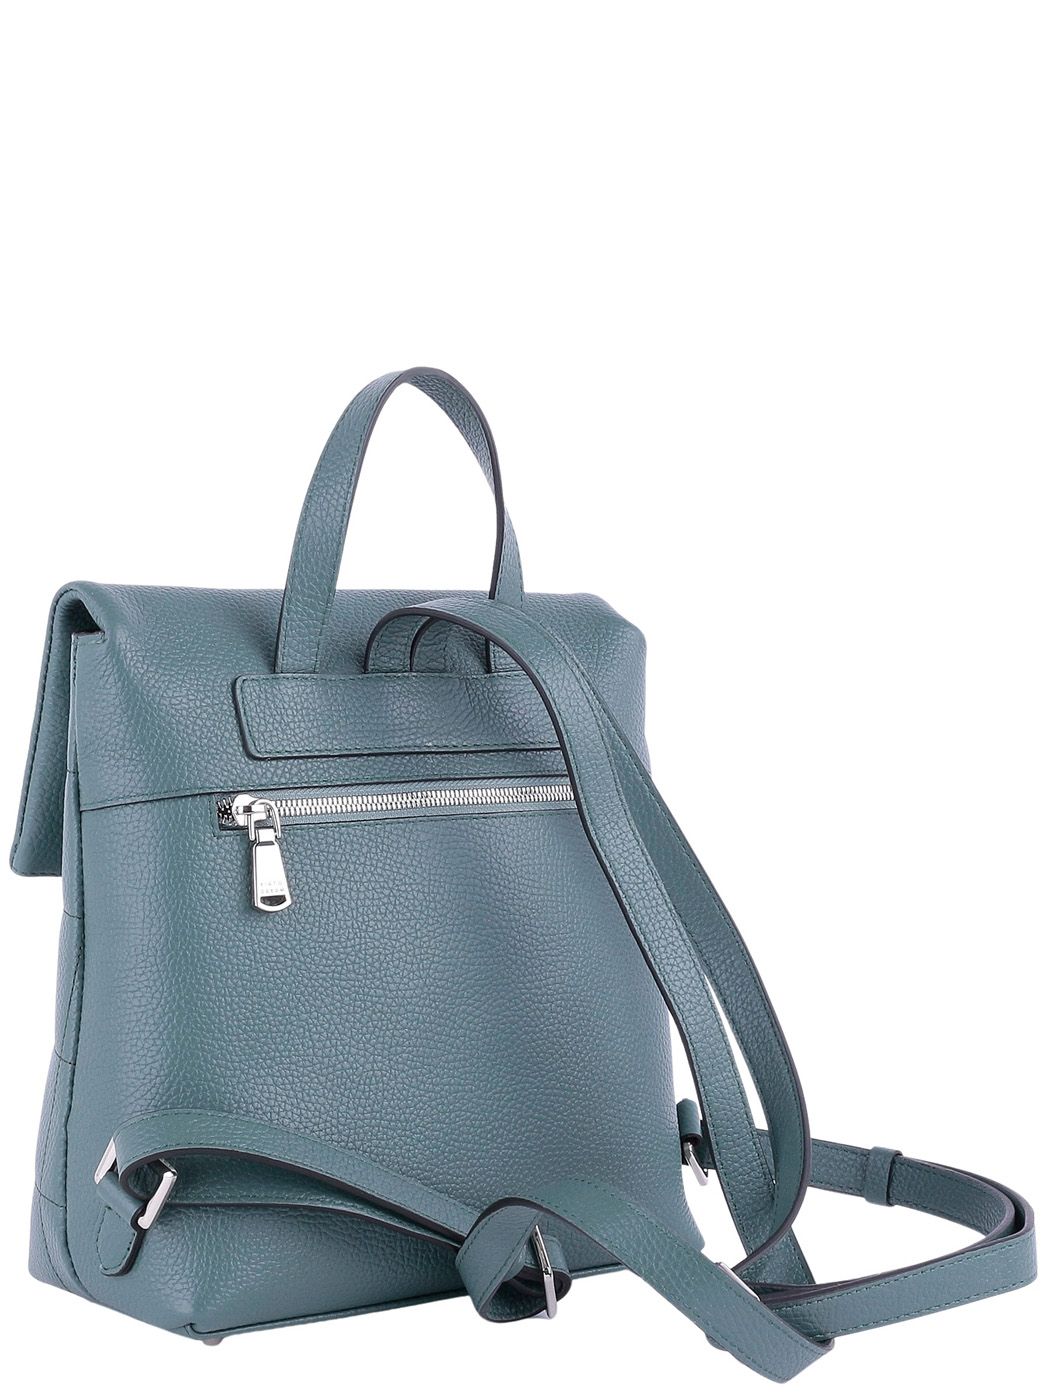 14200 FD мятн рюкзак  жен. летн. натуральная кожа/текстиль зеленый Fiato Dream